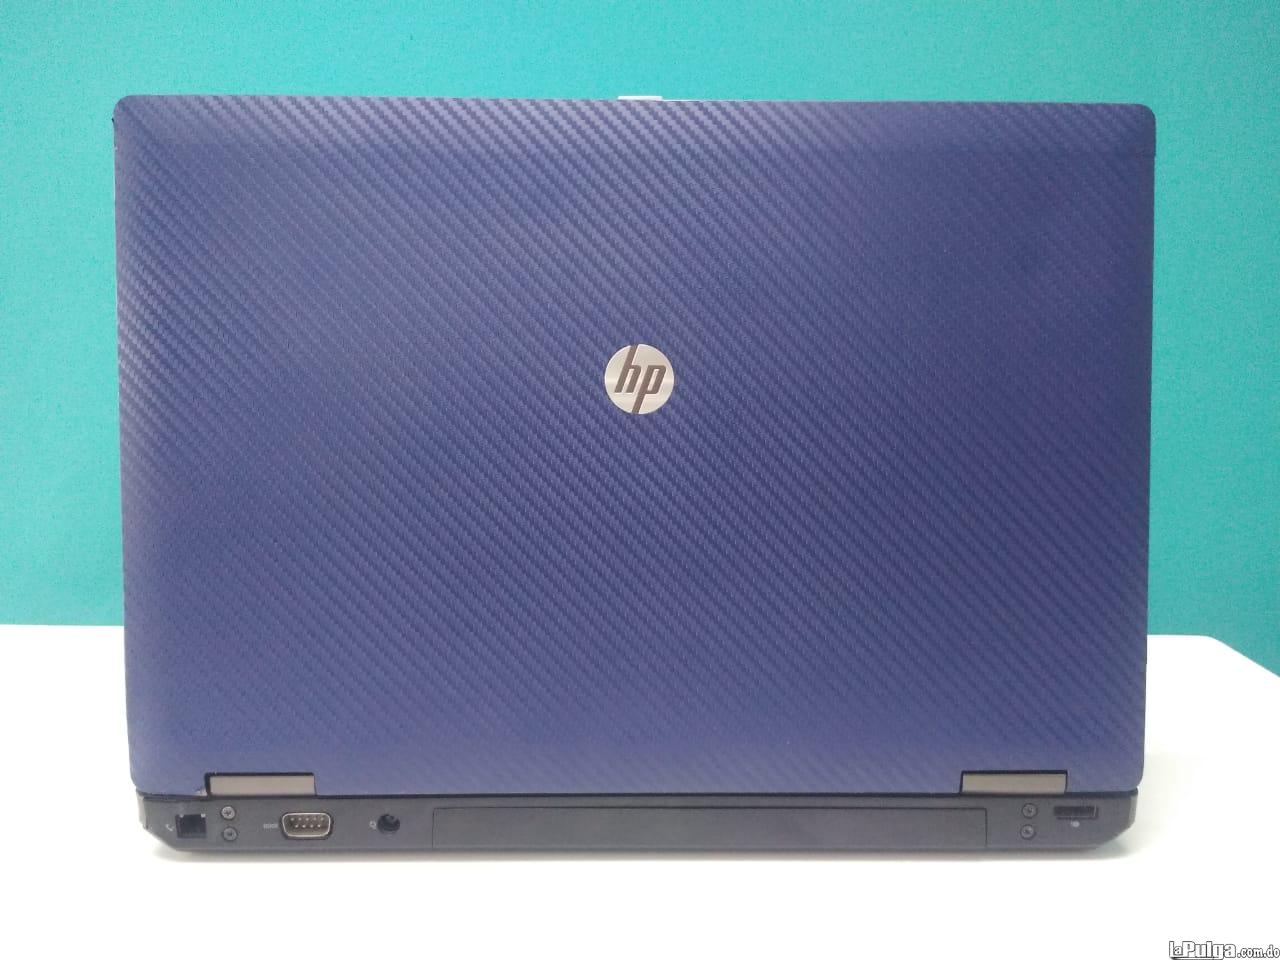  Laptop hp Probook 6570b Core i5 VGA 500GB 4GB RAM  3era Generacion 15 Foto 7010964-4.jpg